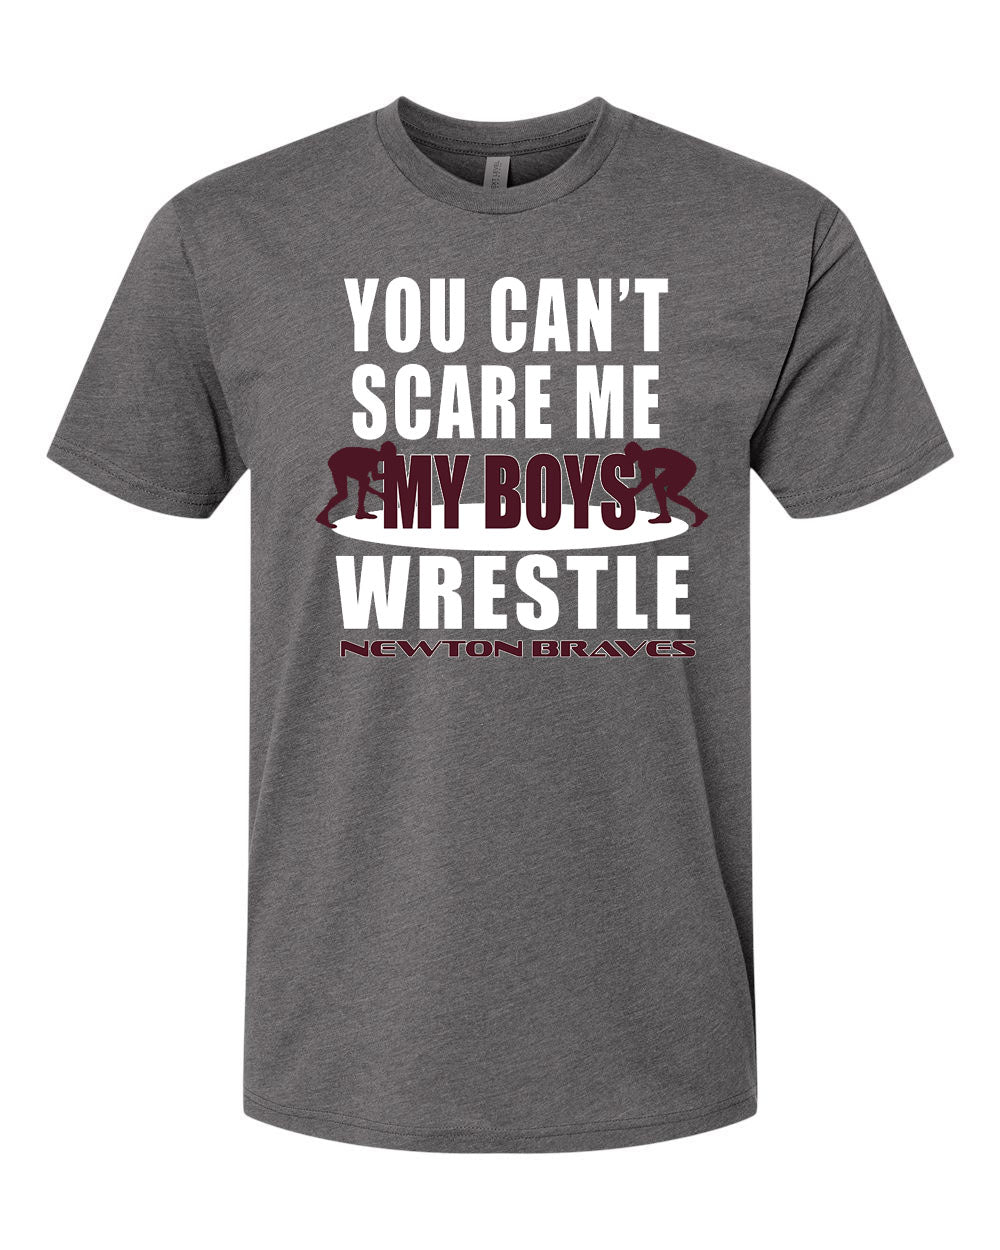 Newton wrestling design 11 T-Shirt